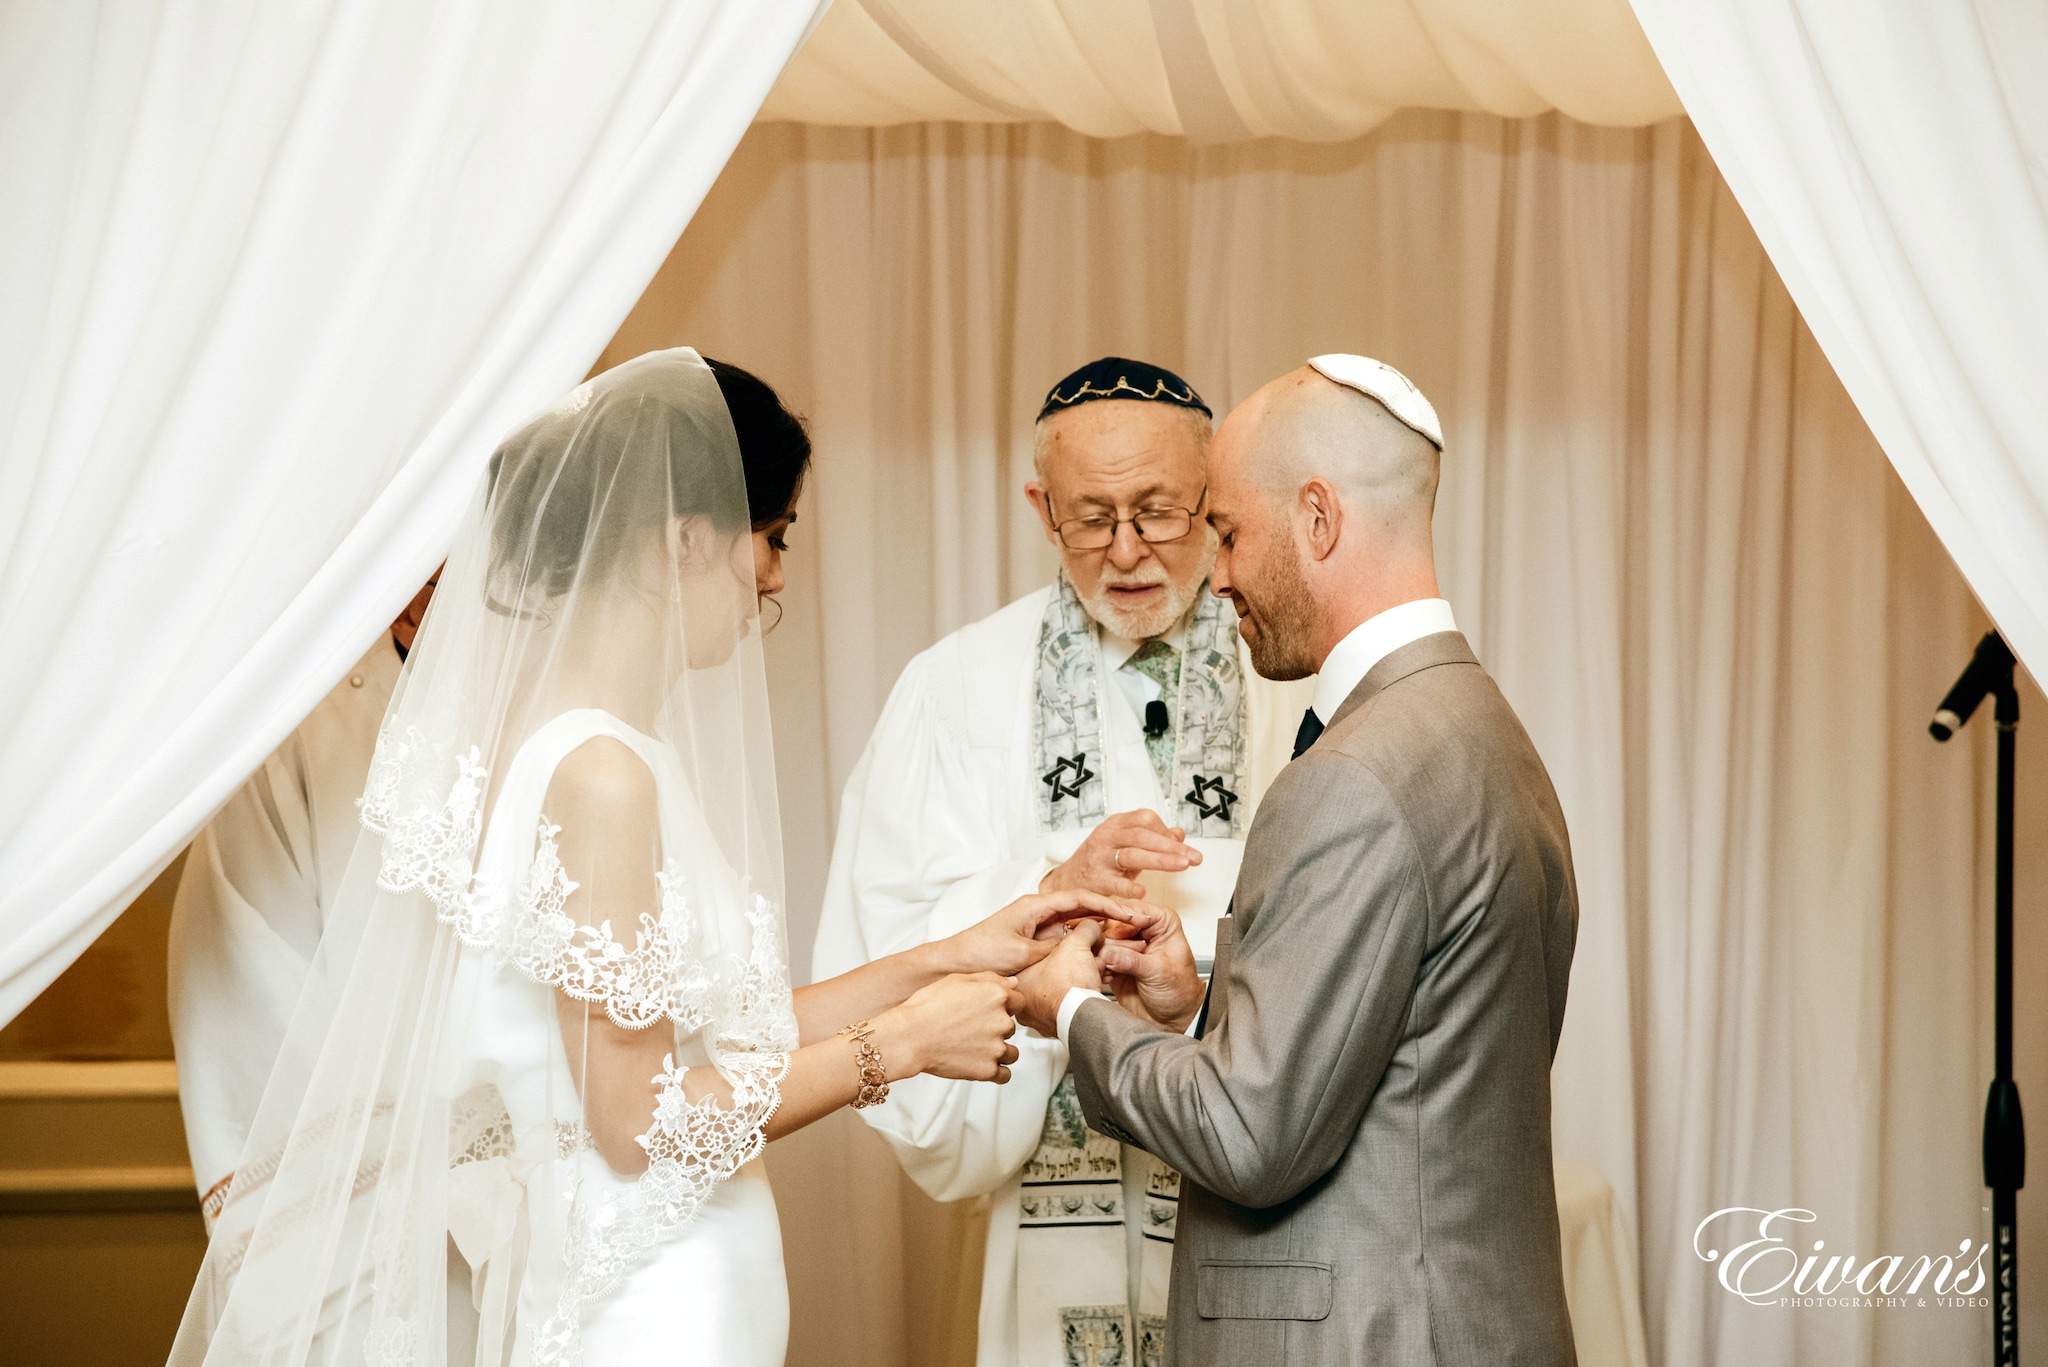 judaism marriage essay